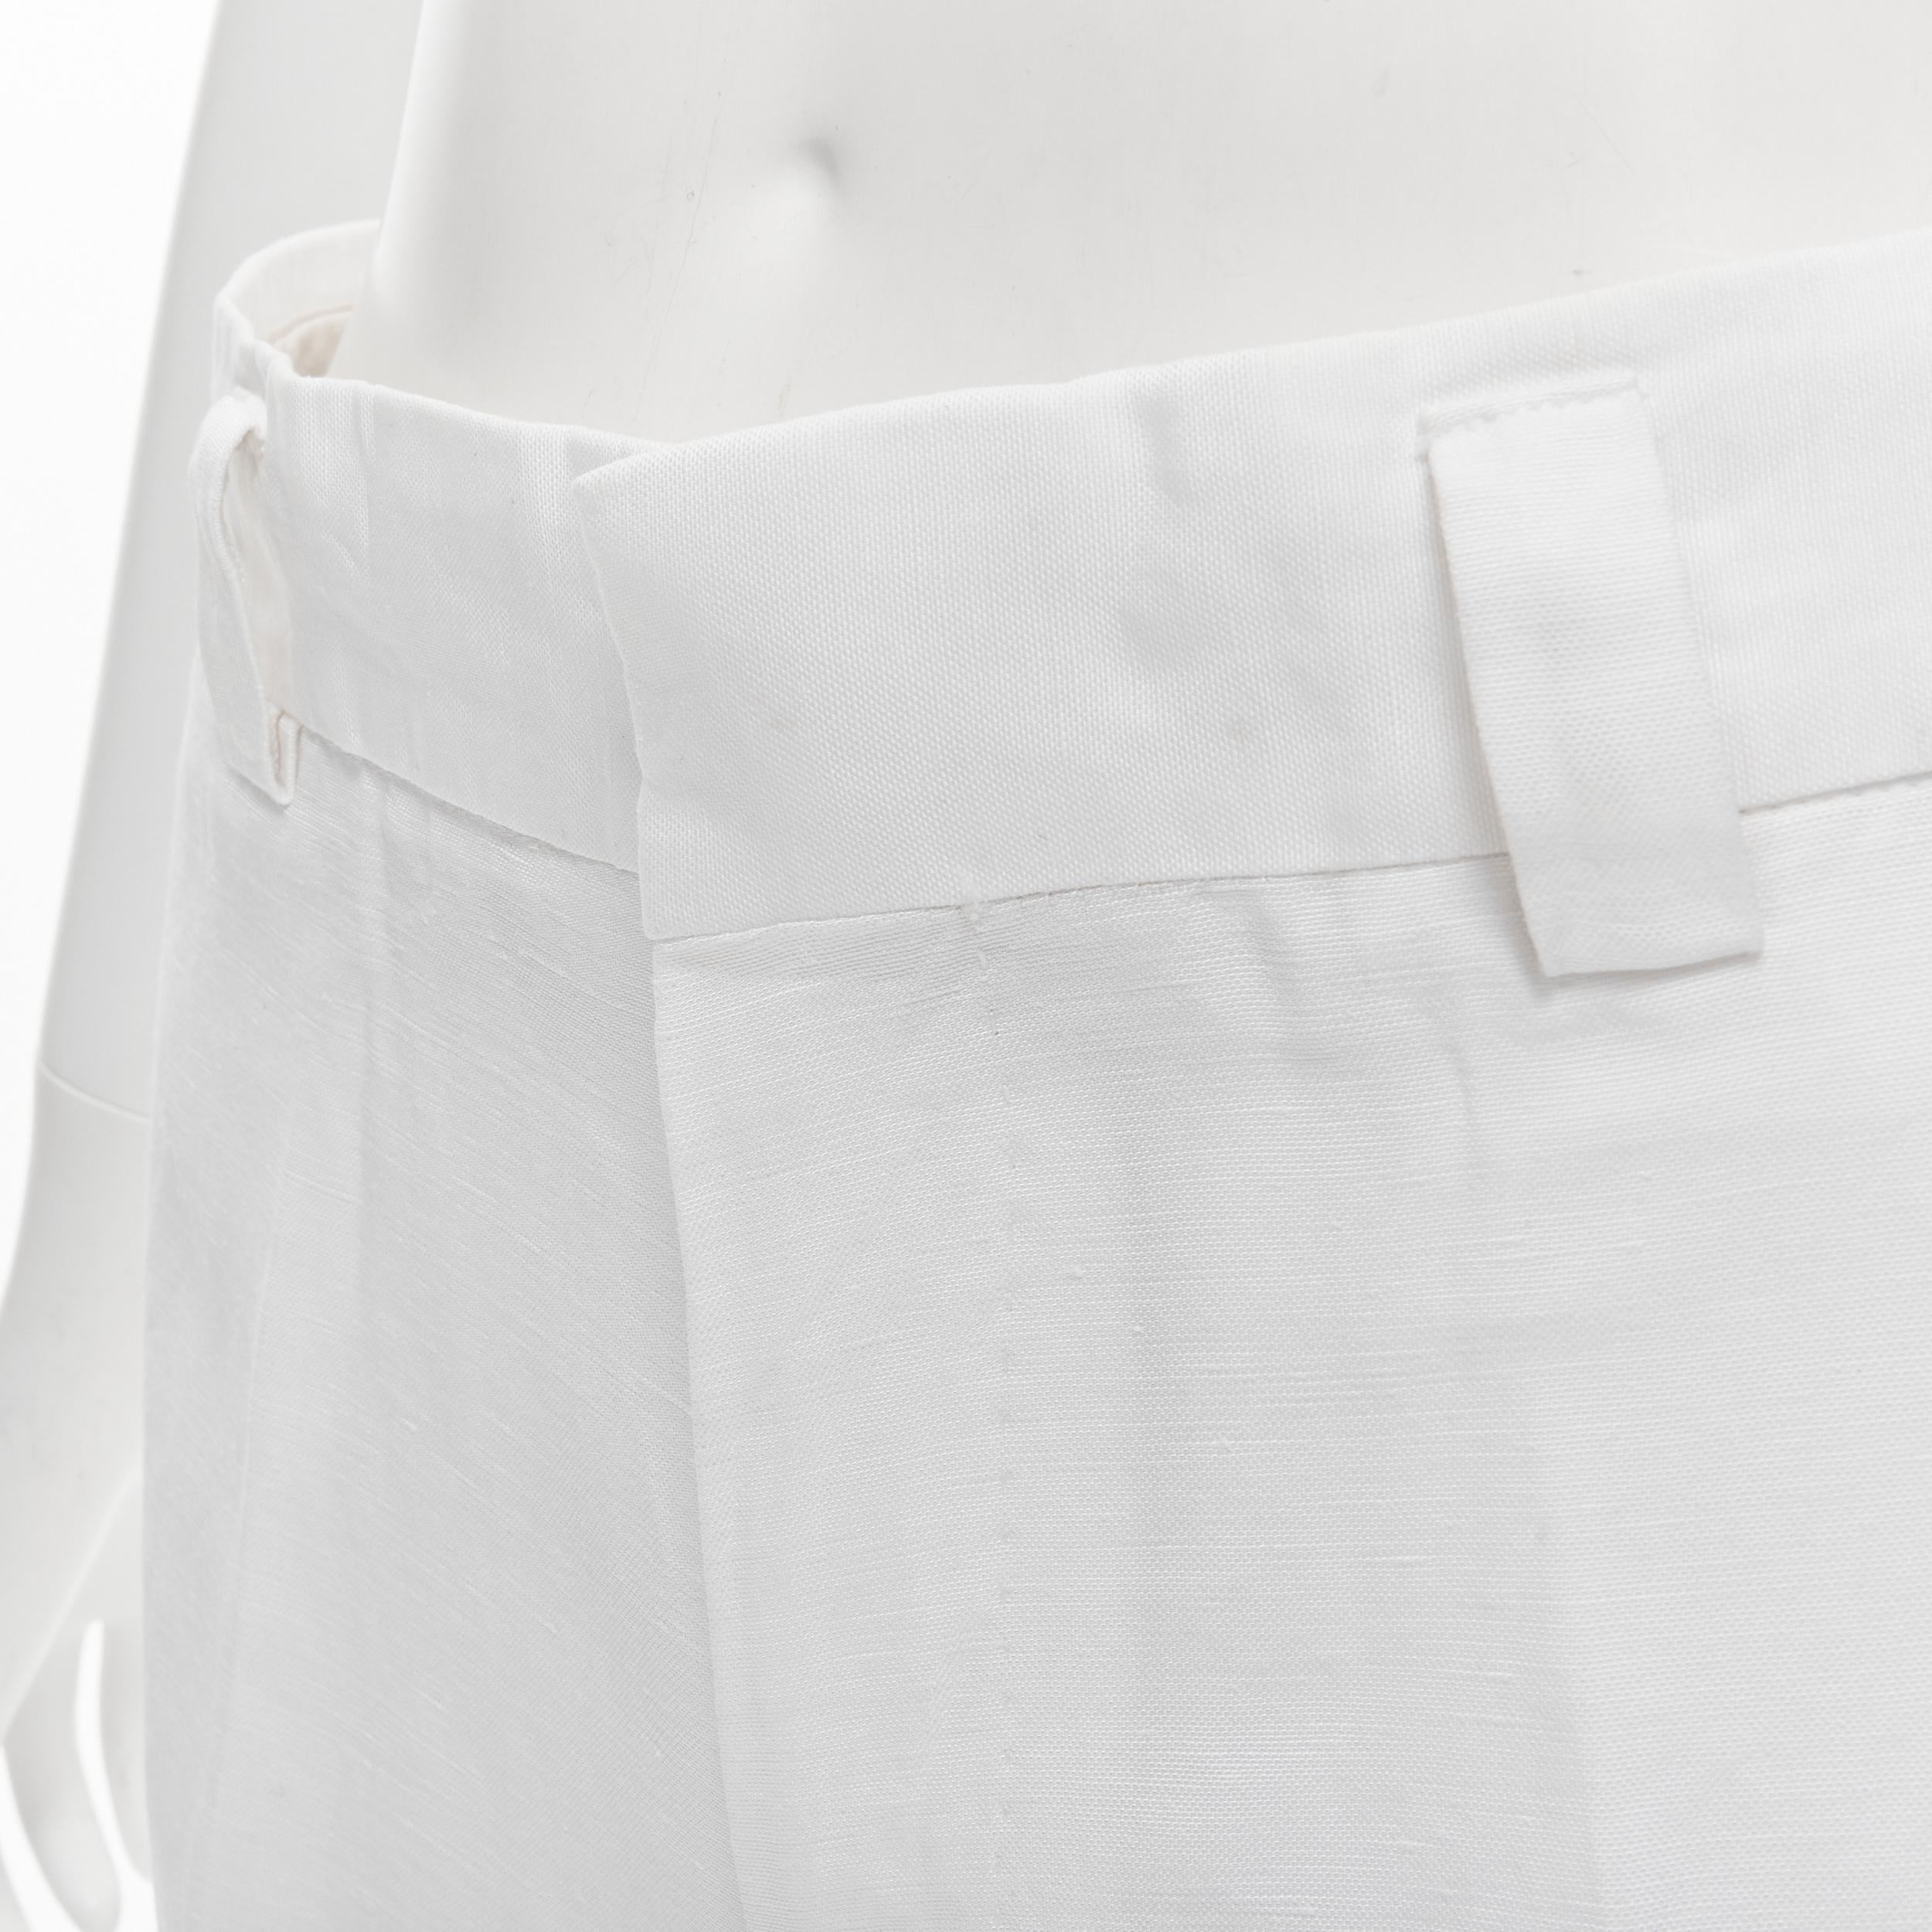 HAIDER ACKERMANN white grosgrain linen drop crotch cropped trousers FR38 S For Sale 1